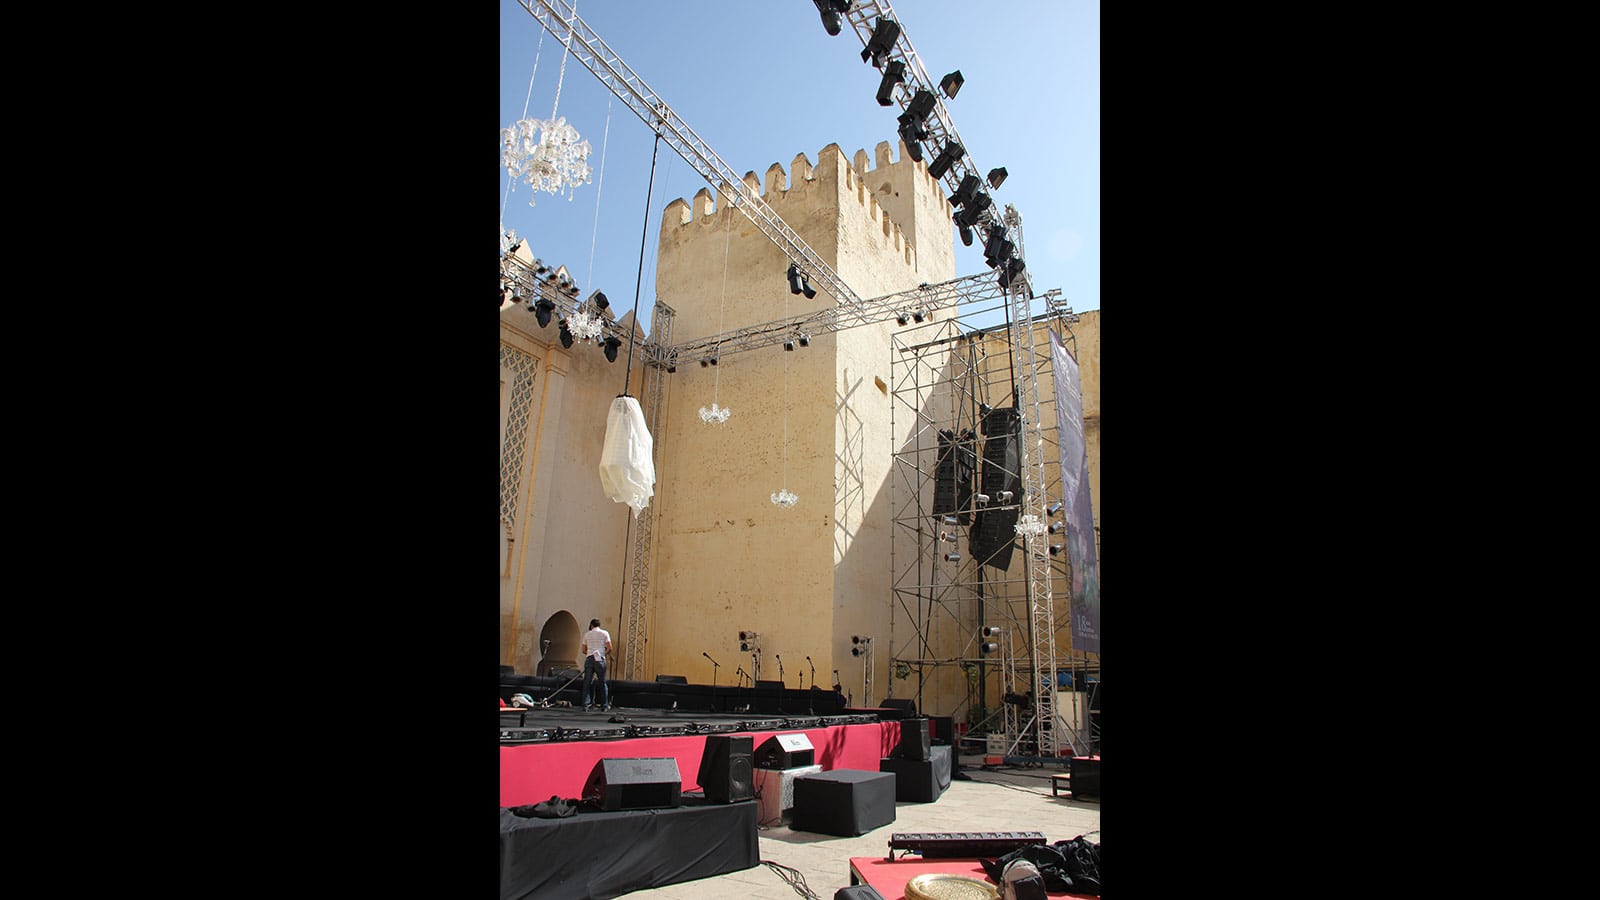 Meyer Sound MILO Line Arrays Ensure Consistent Coverage at Moroccan Festival